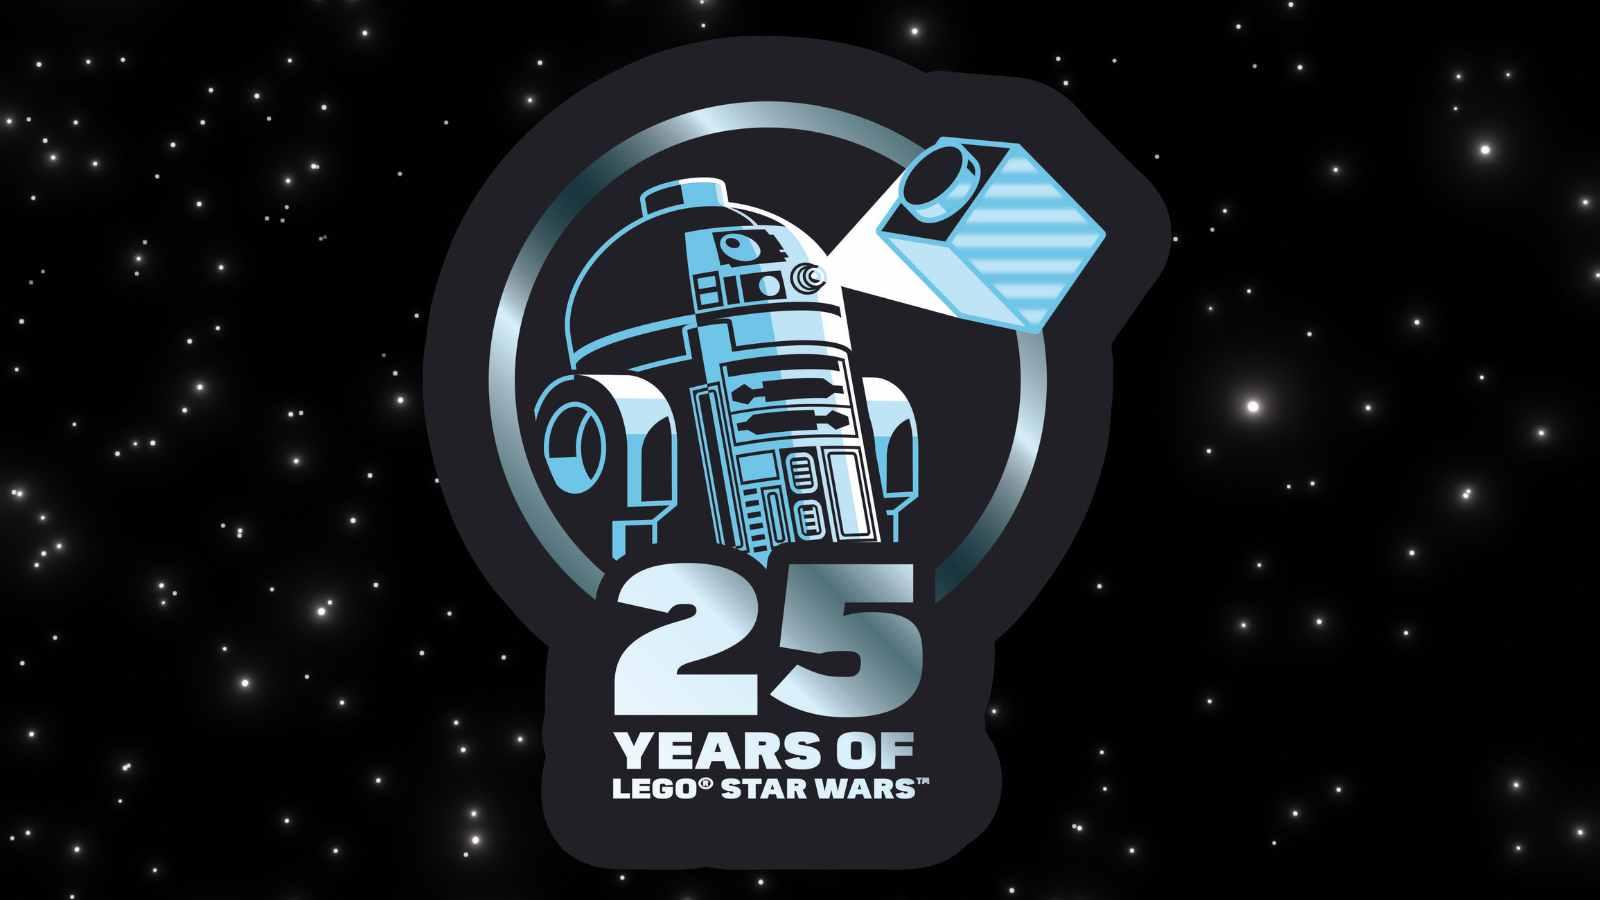 The new LEGO Star Wars 25th anniversary logo on a galaxy background